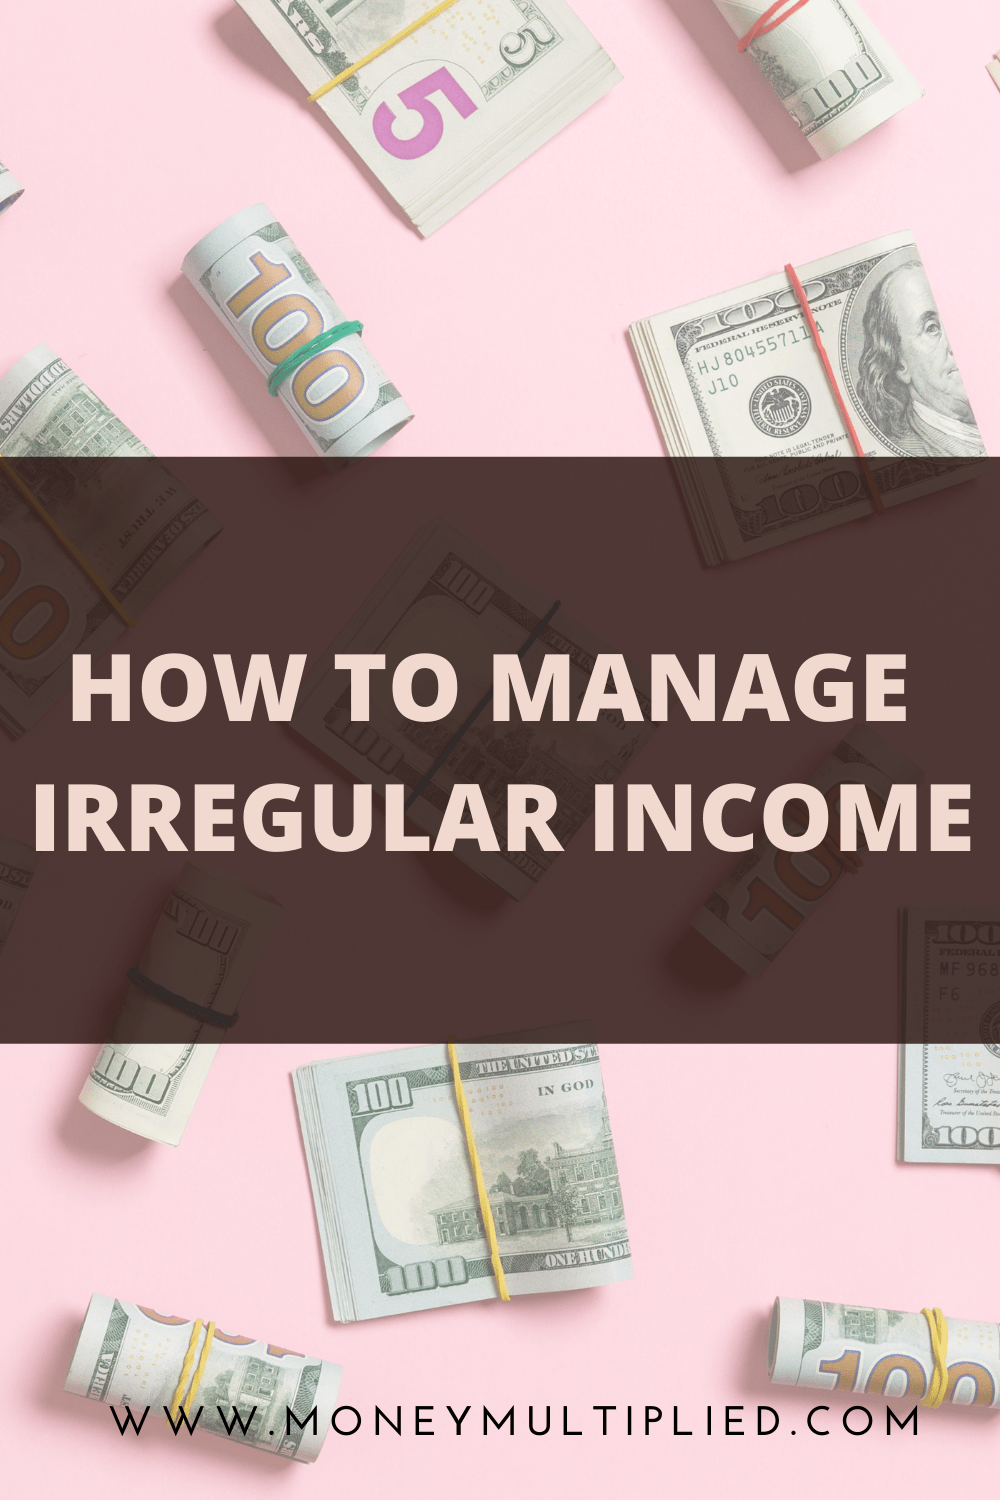 How to manage irregular income